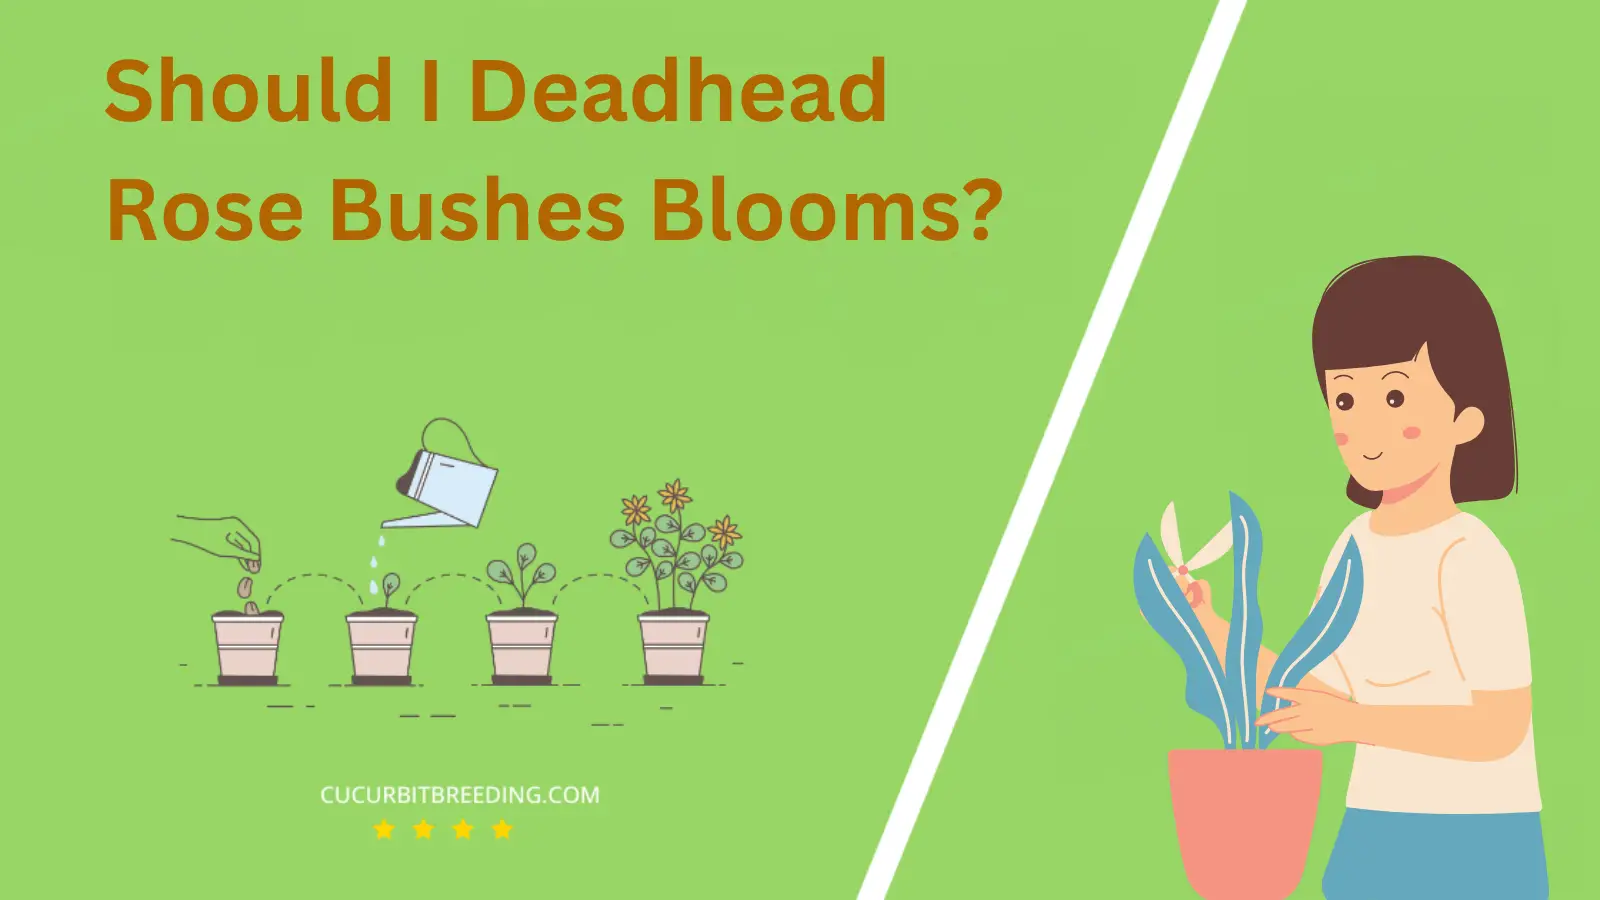 Should I Deadhead Rose Bushes Blooms?